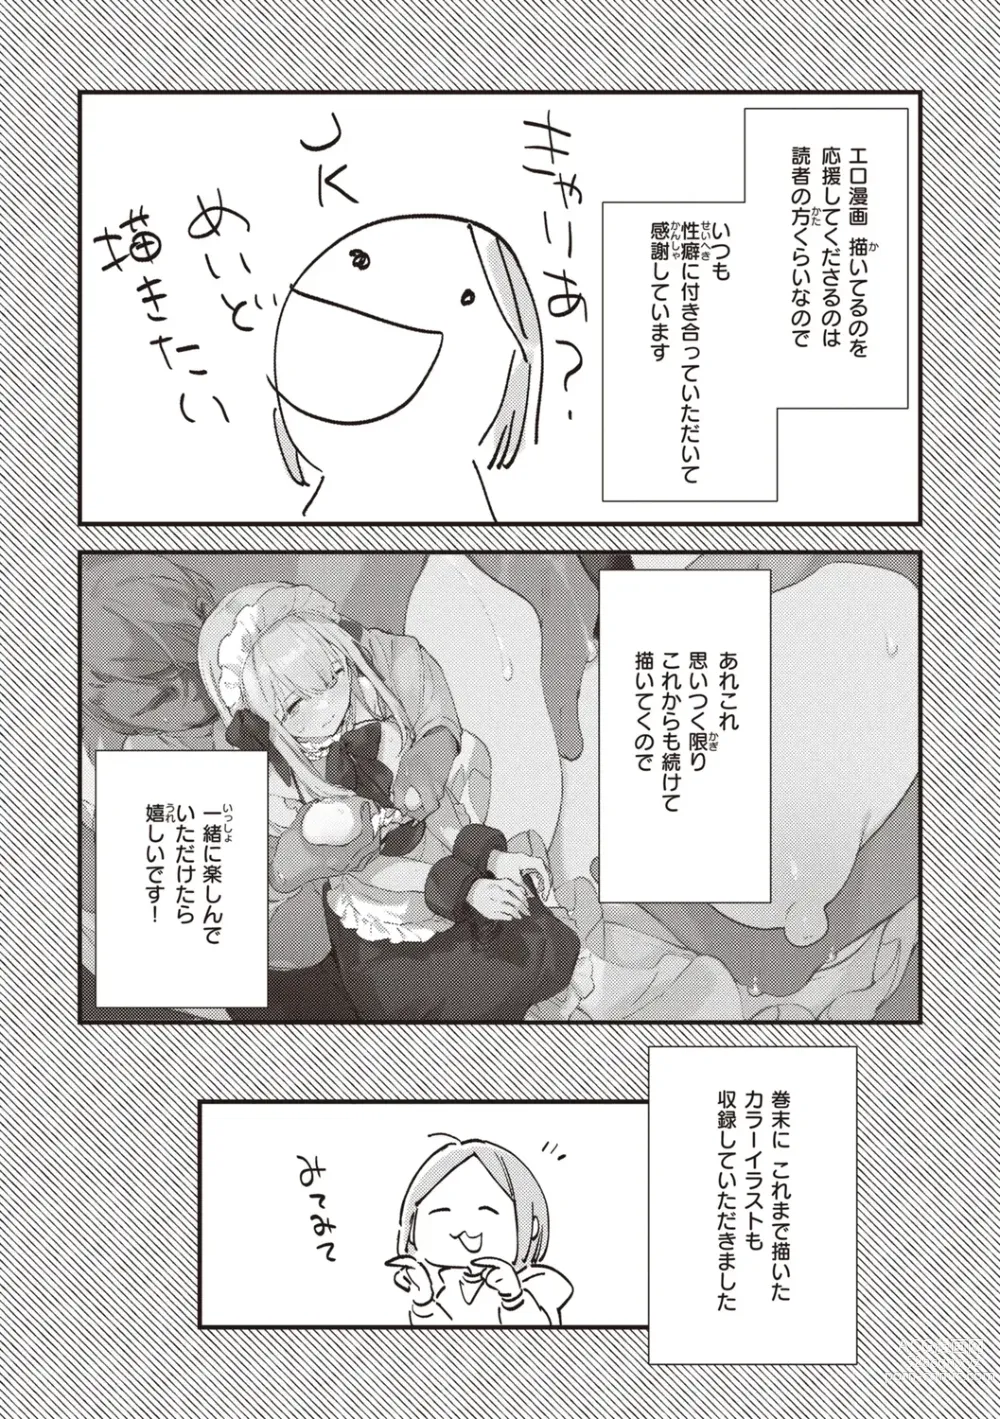 Page 180 of manga Nakushimono - Things I can´t find.